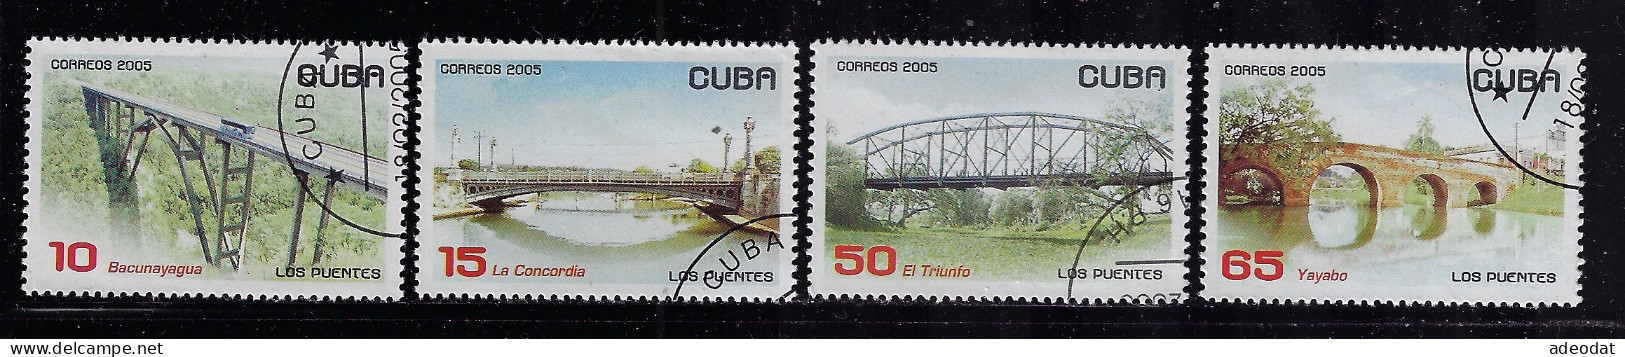 CUBA 2005 SCOTT 4459-4462 CANCELLED - Usados